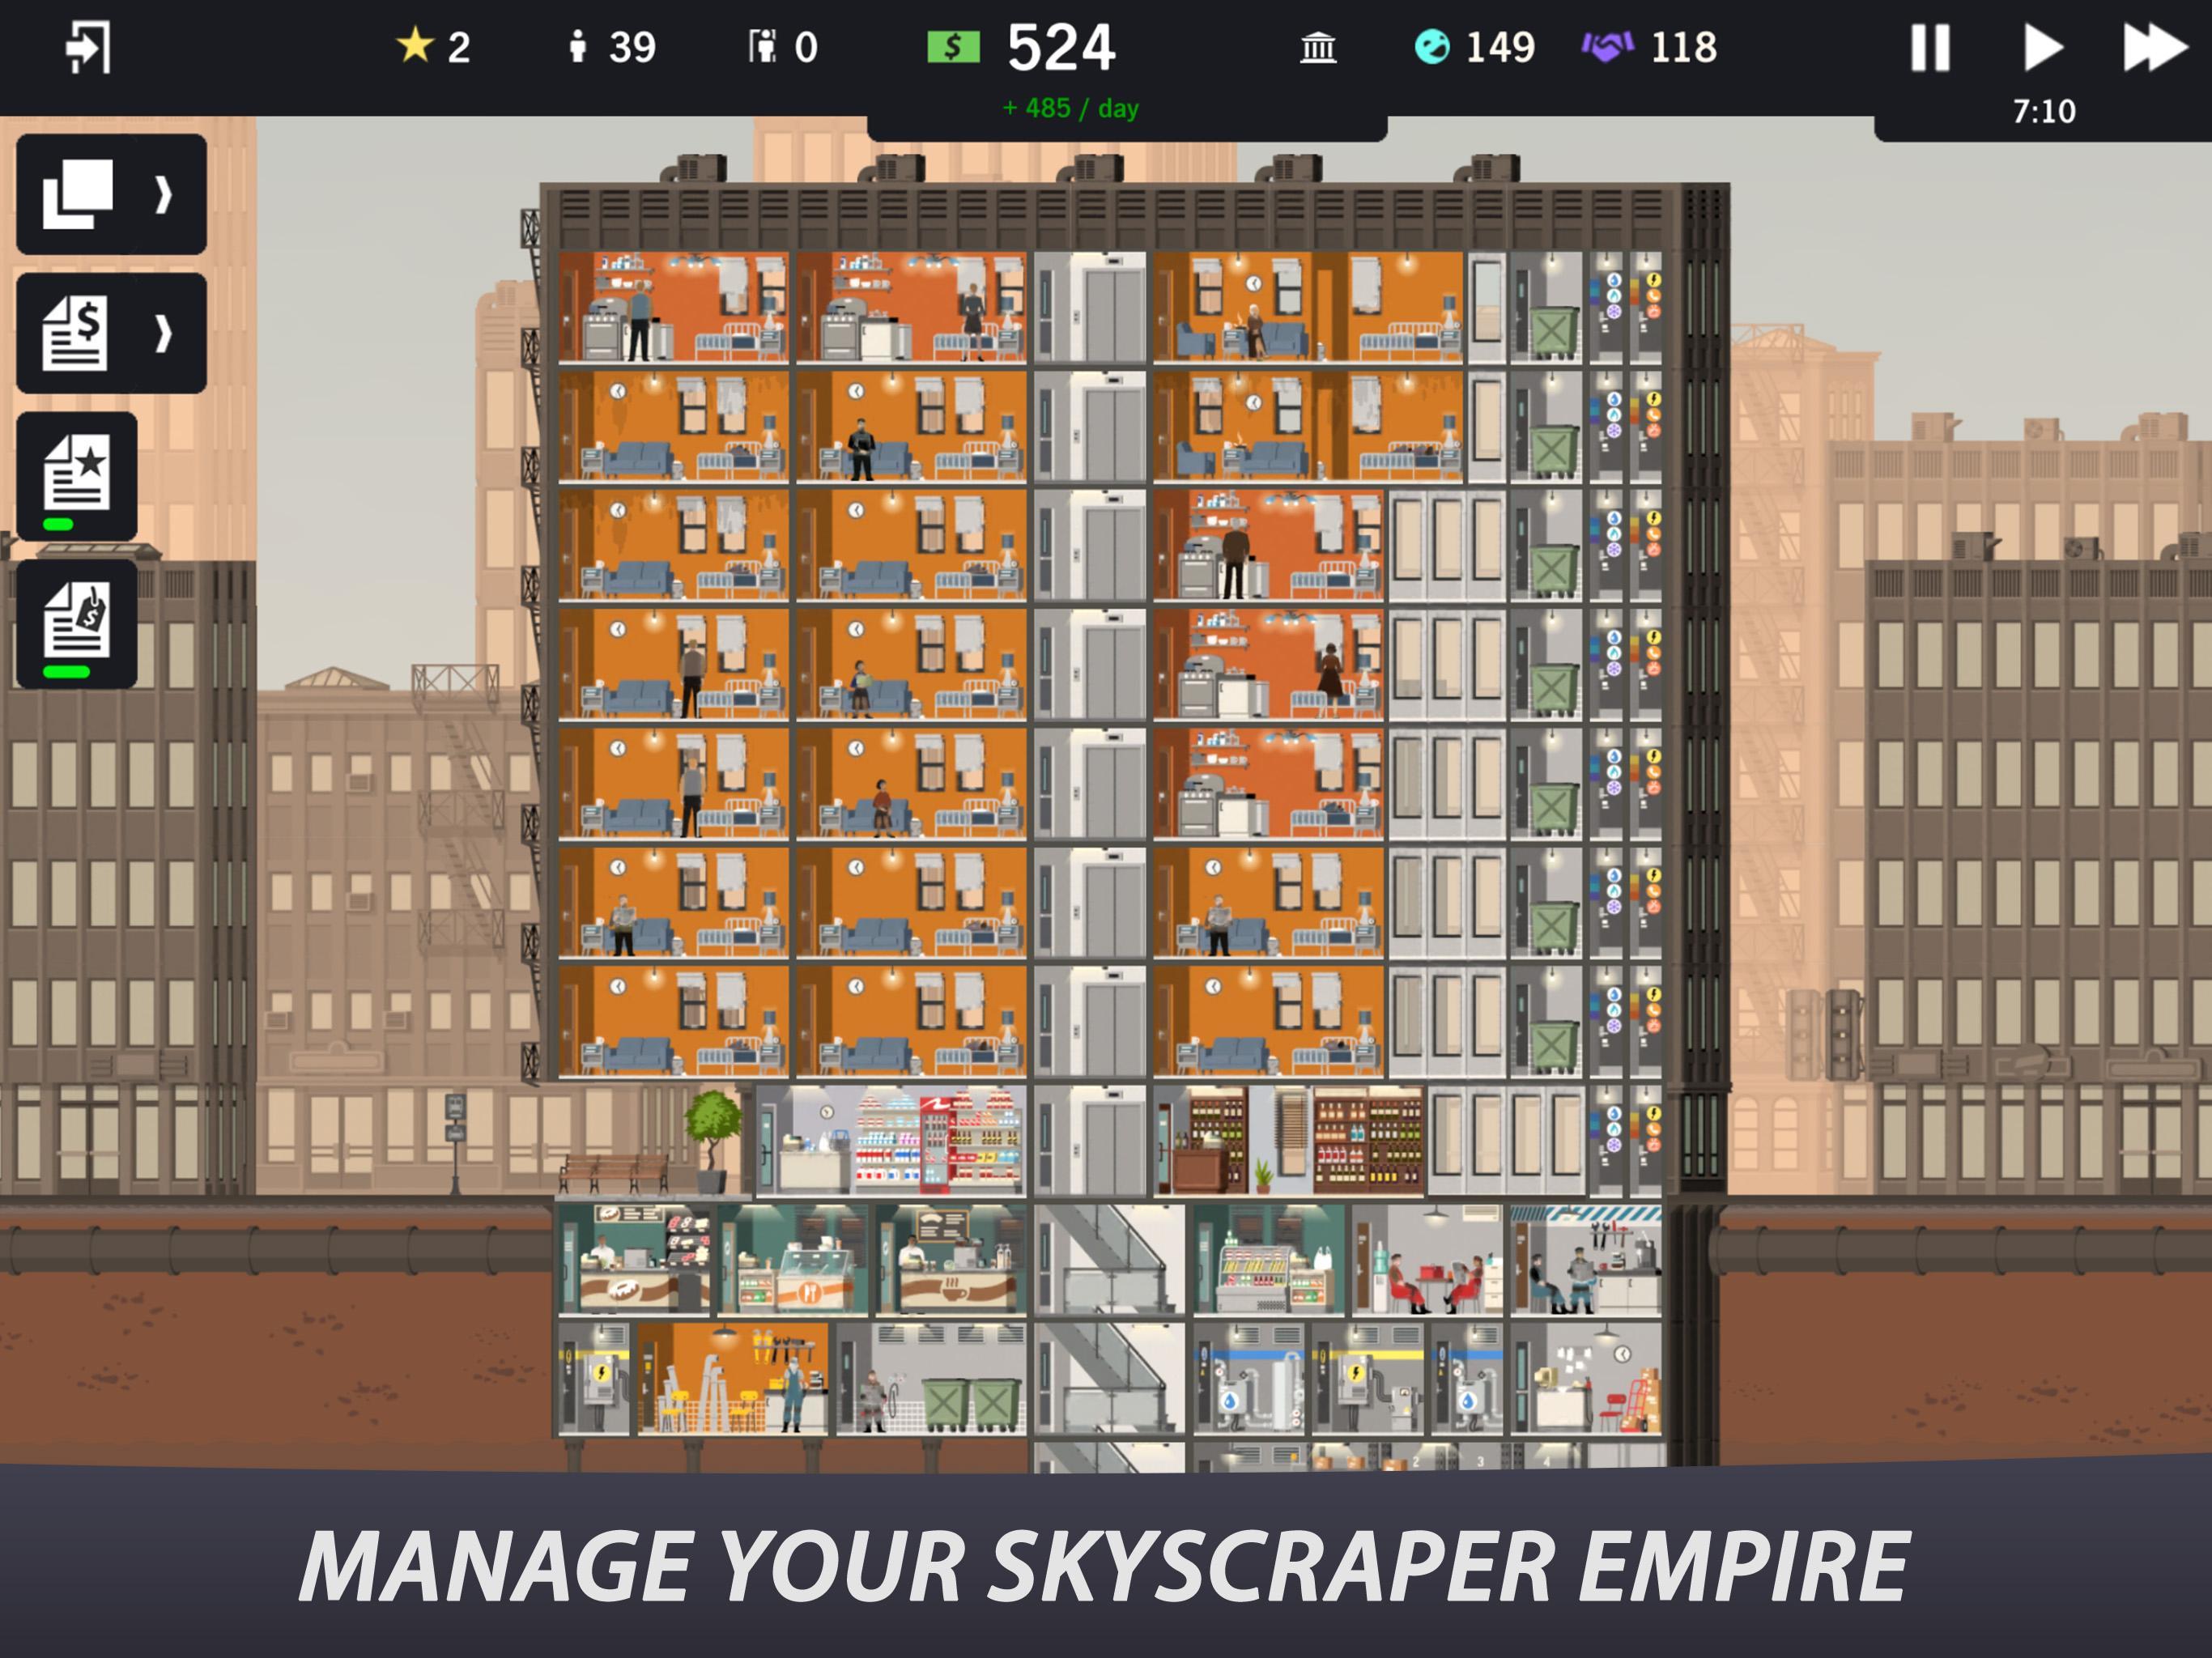 Screenshot of Project Highrise